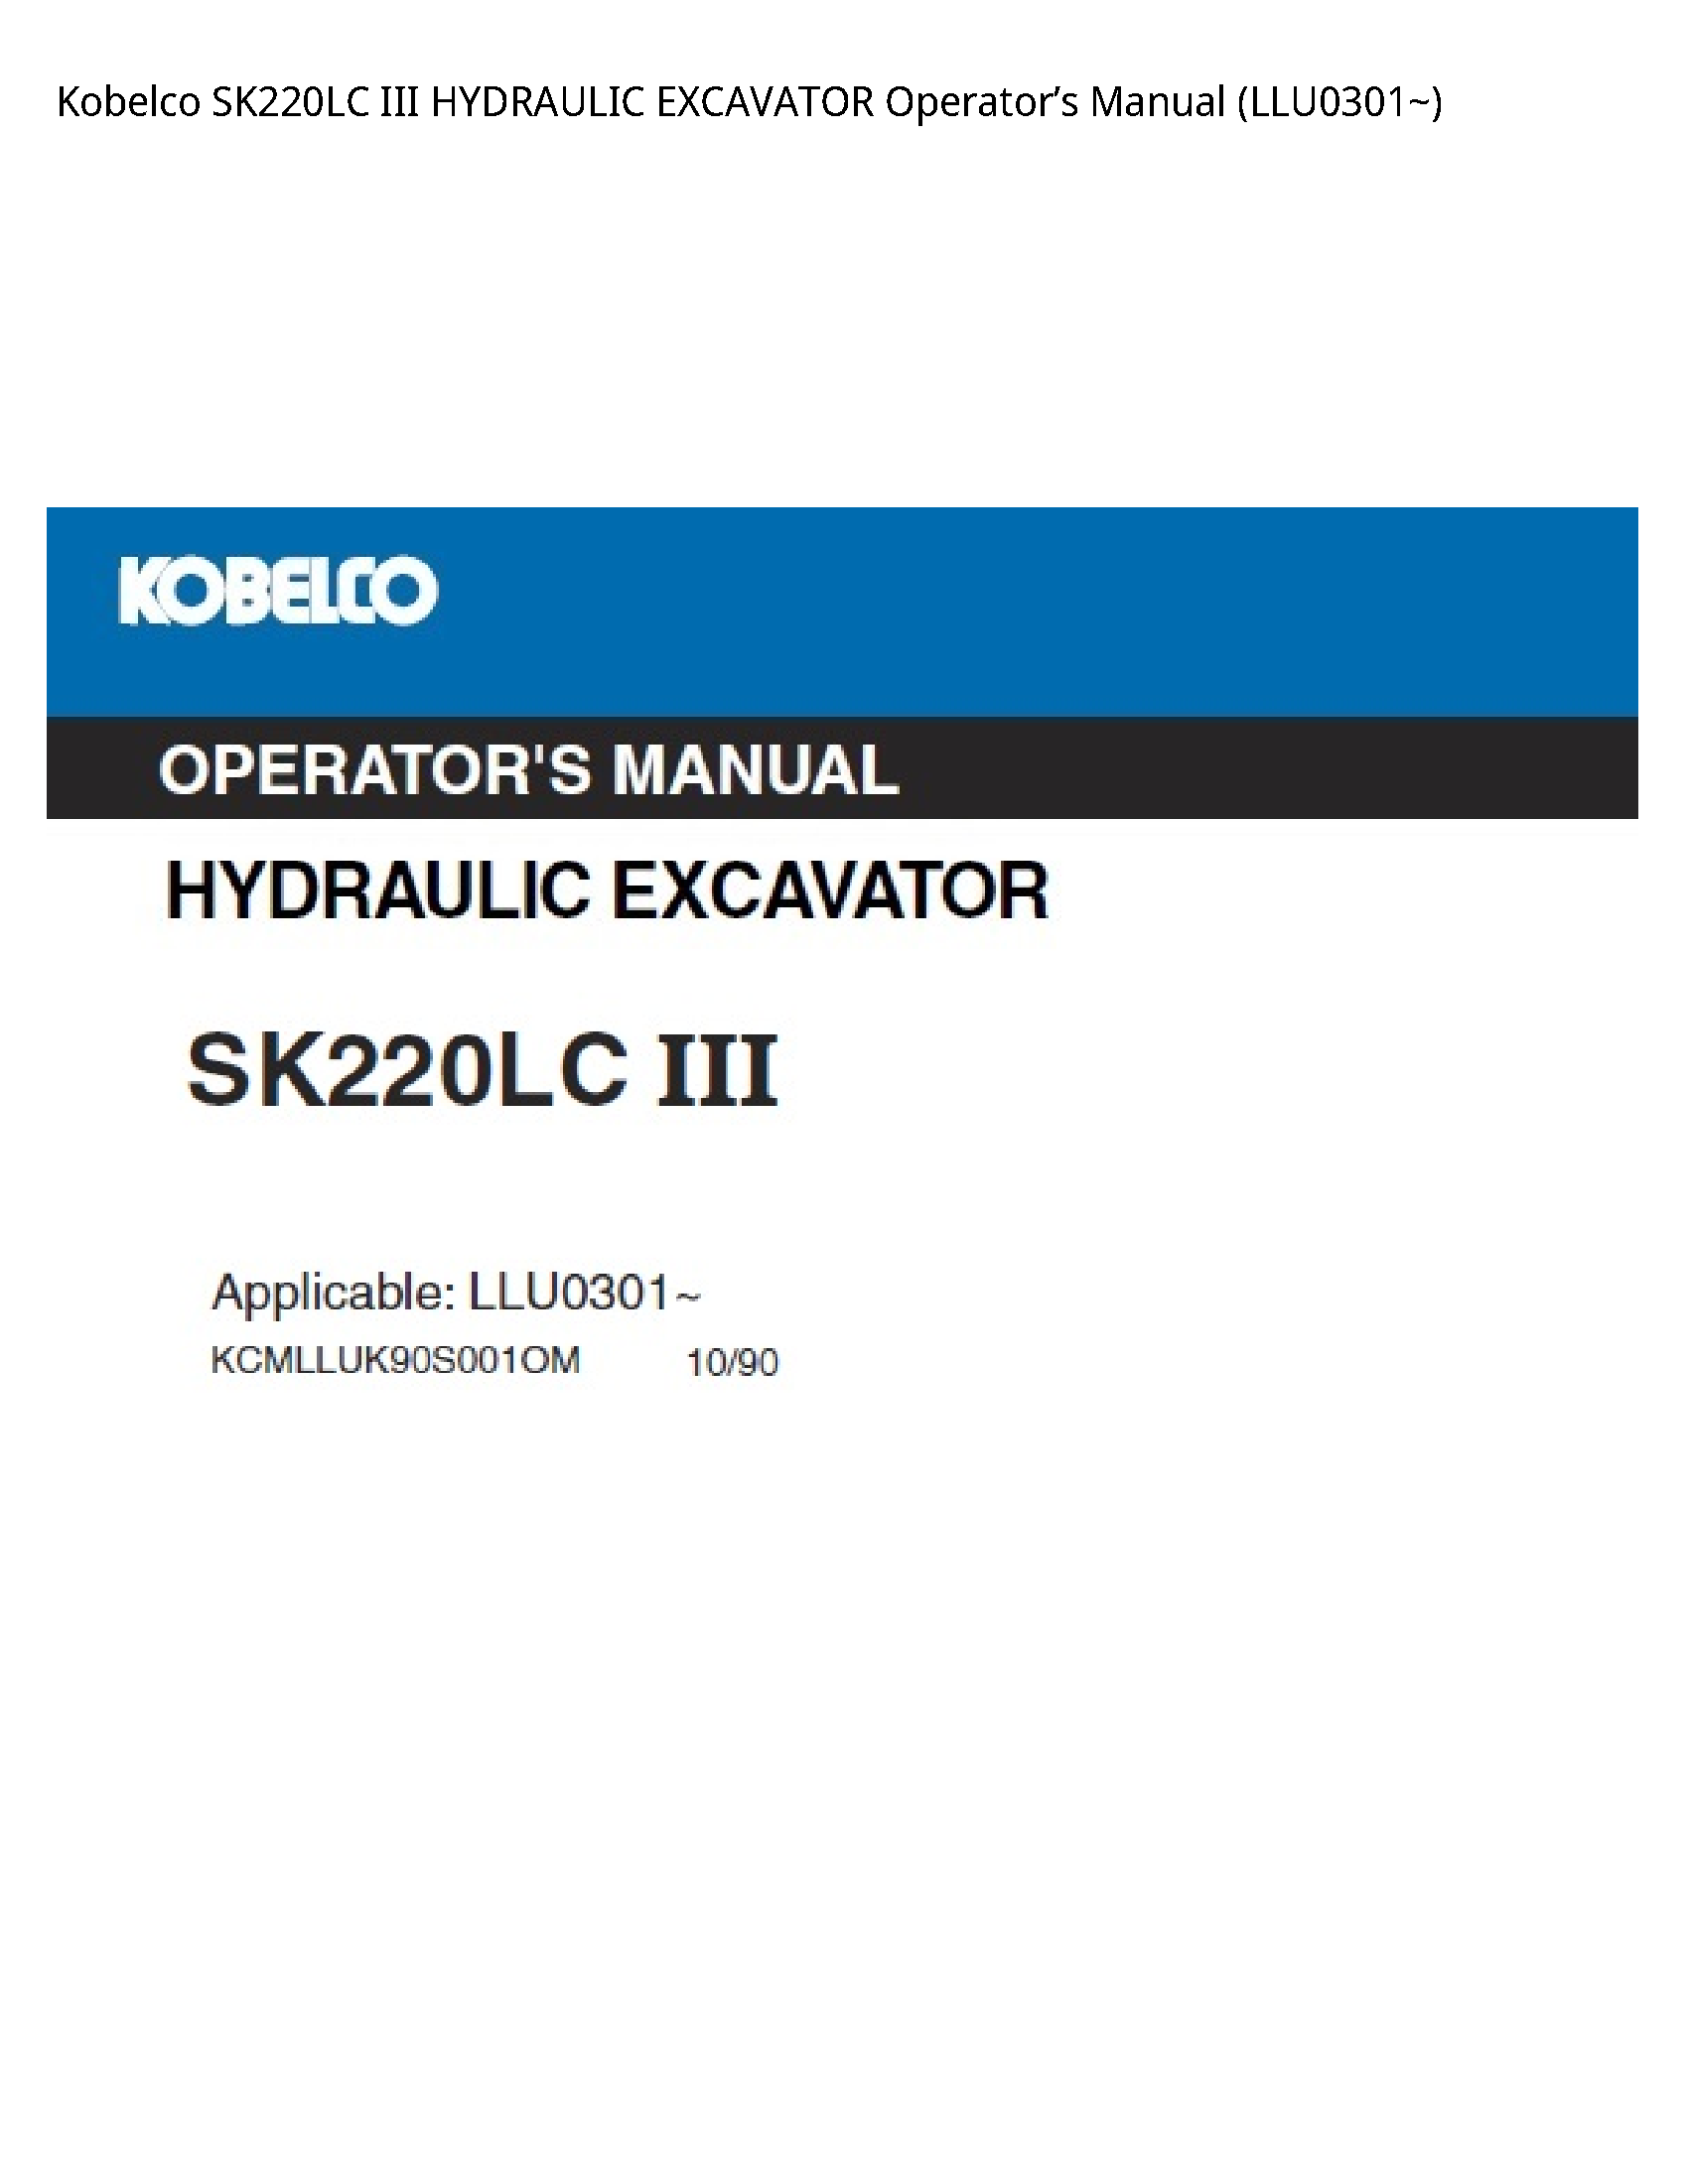 Kobelco SK220LC III HYDRAULIC EXCAVATOR Operator’s manual